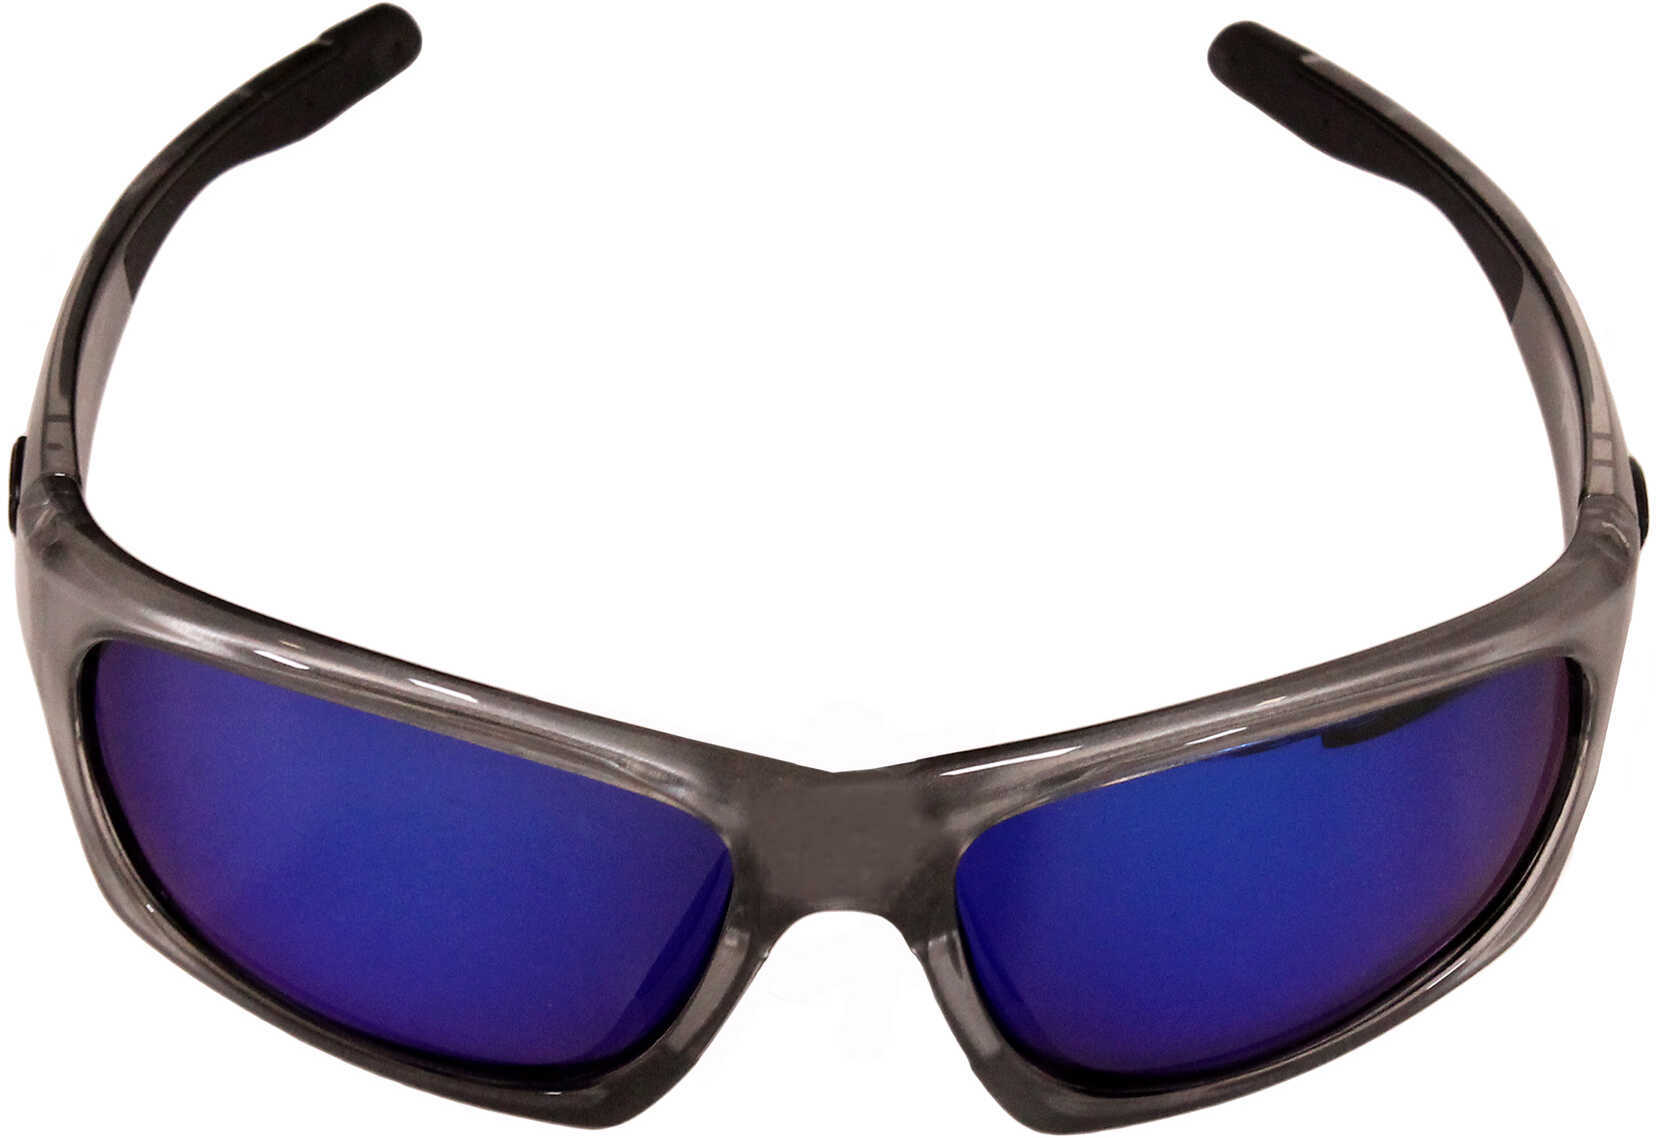 Strike King Lures SK Plus Cypress Sunglasses Shiny Brown Tortiseshell Frame, Multi Layer Green Mirror Amber Base Lens Md